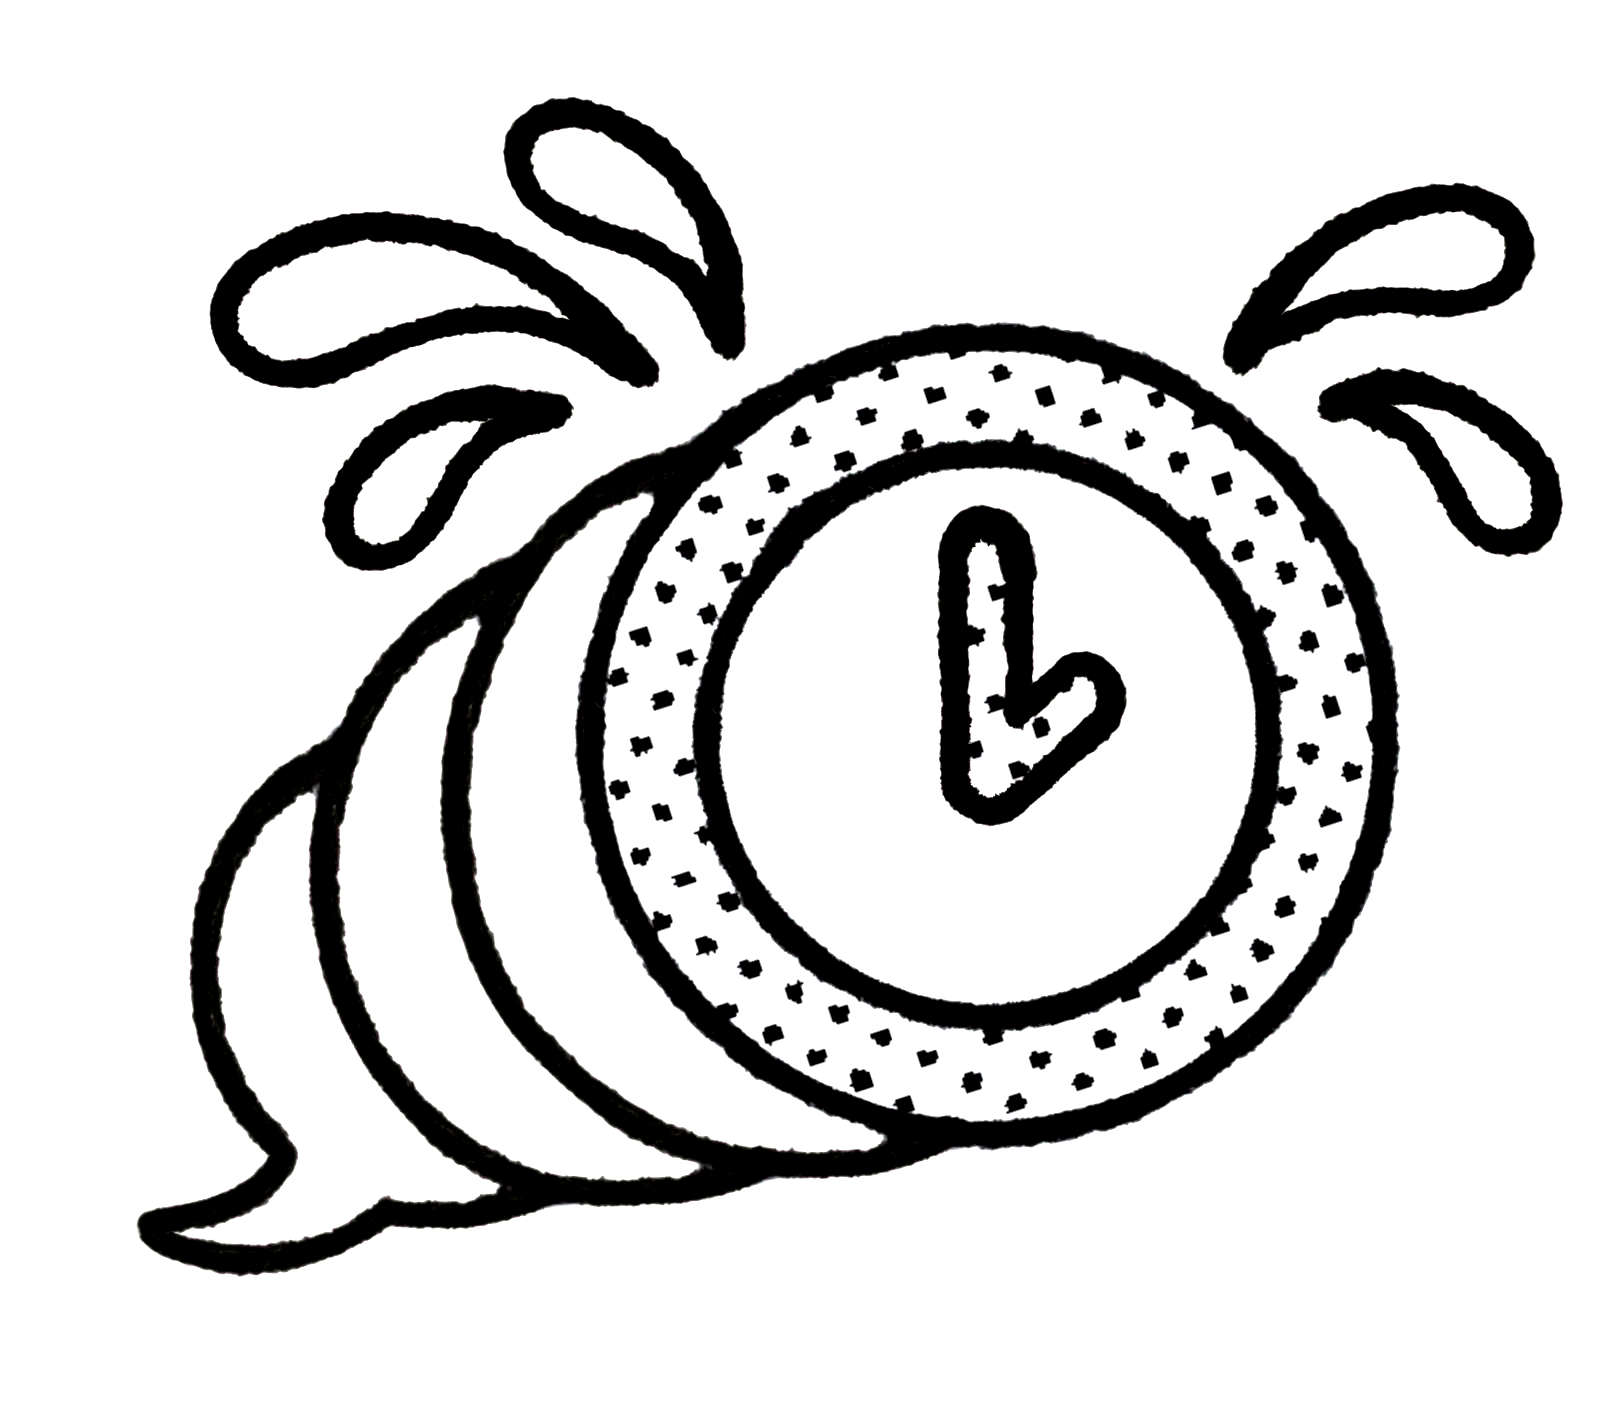 Speech bubble forming a clock